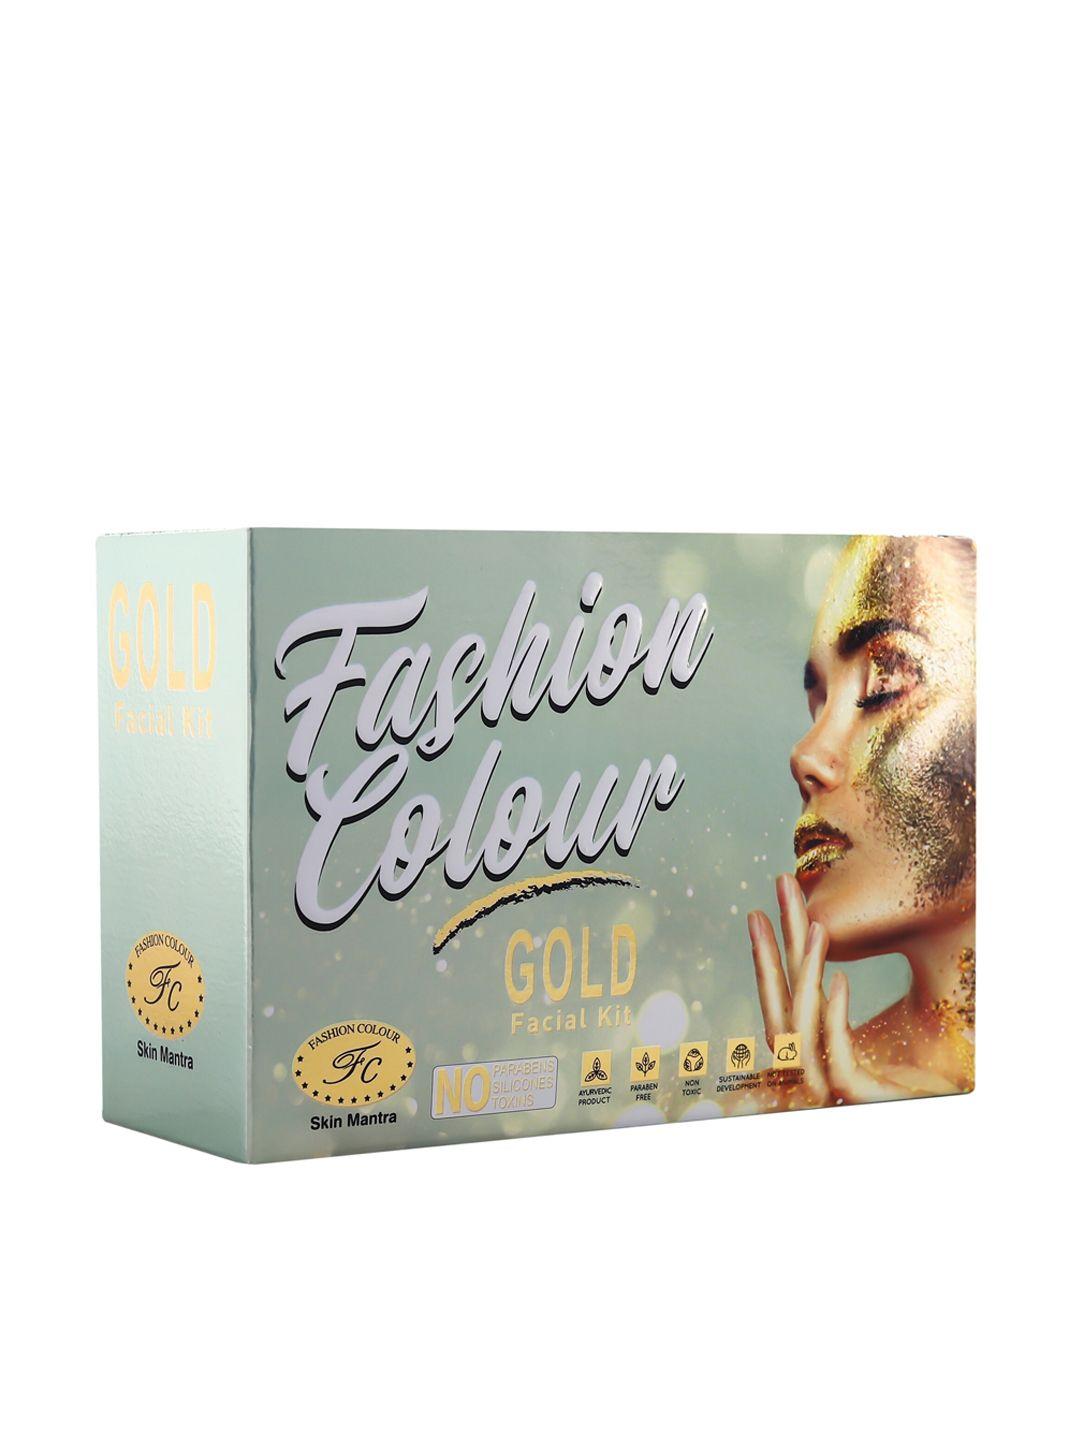 fashion colour gold facial kit - 200g